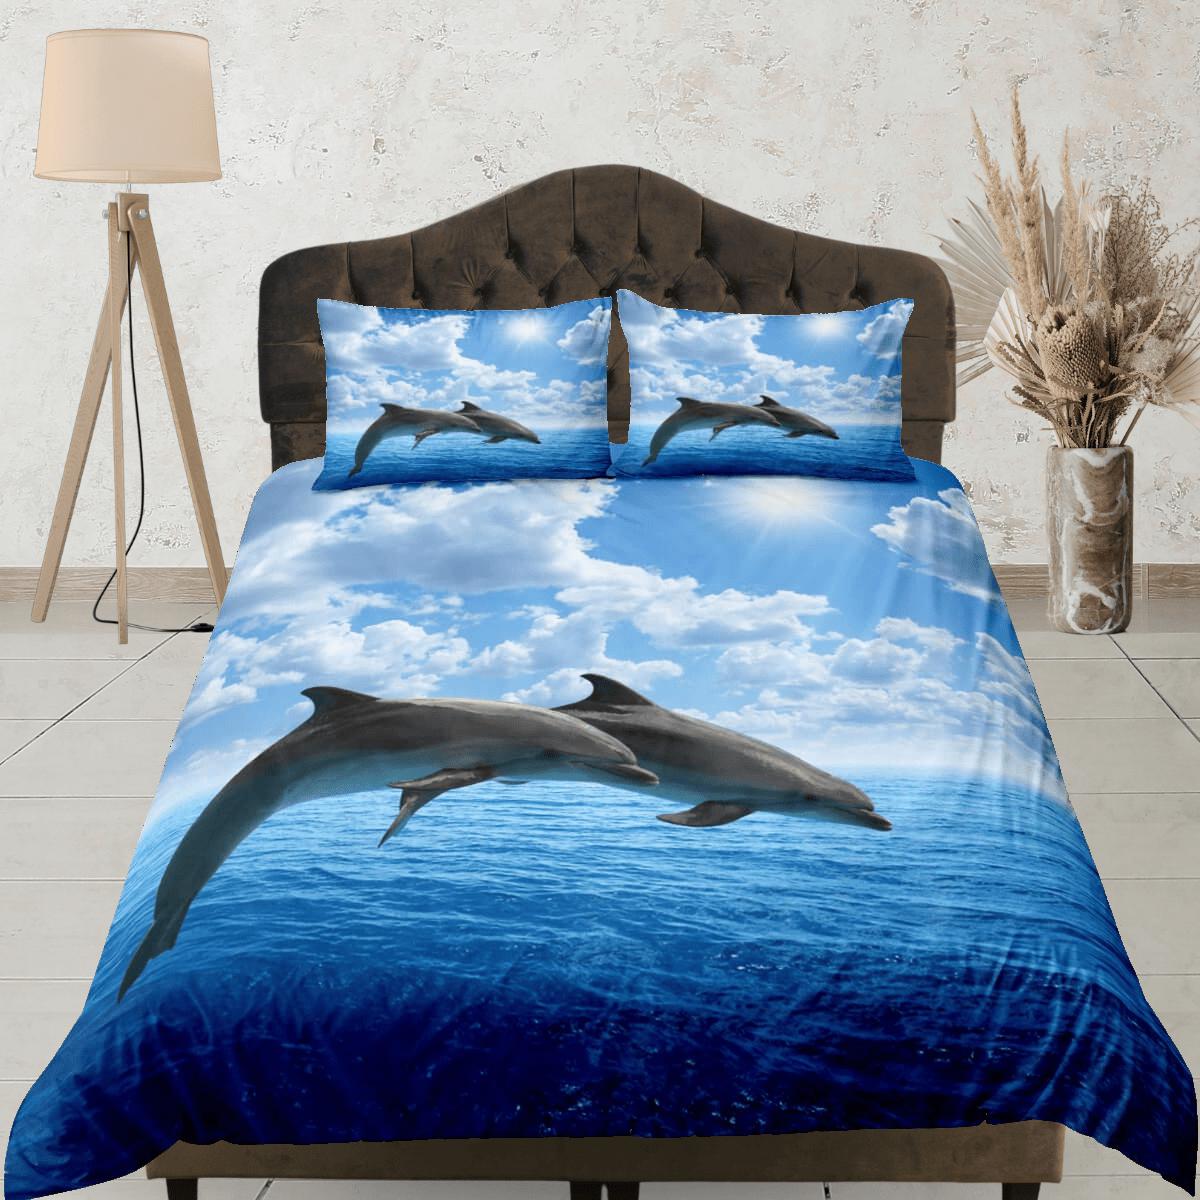 daintyduvet Jumping dolphins bedding blue duvet cover, ocean blush decor bottle nose dolphin bedding set full king queen twin, college dorm bedding gift